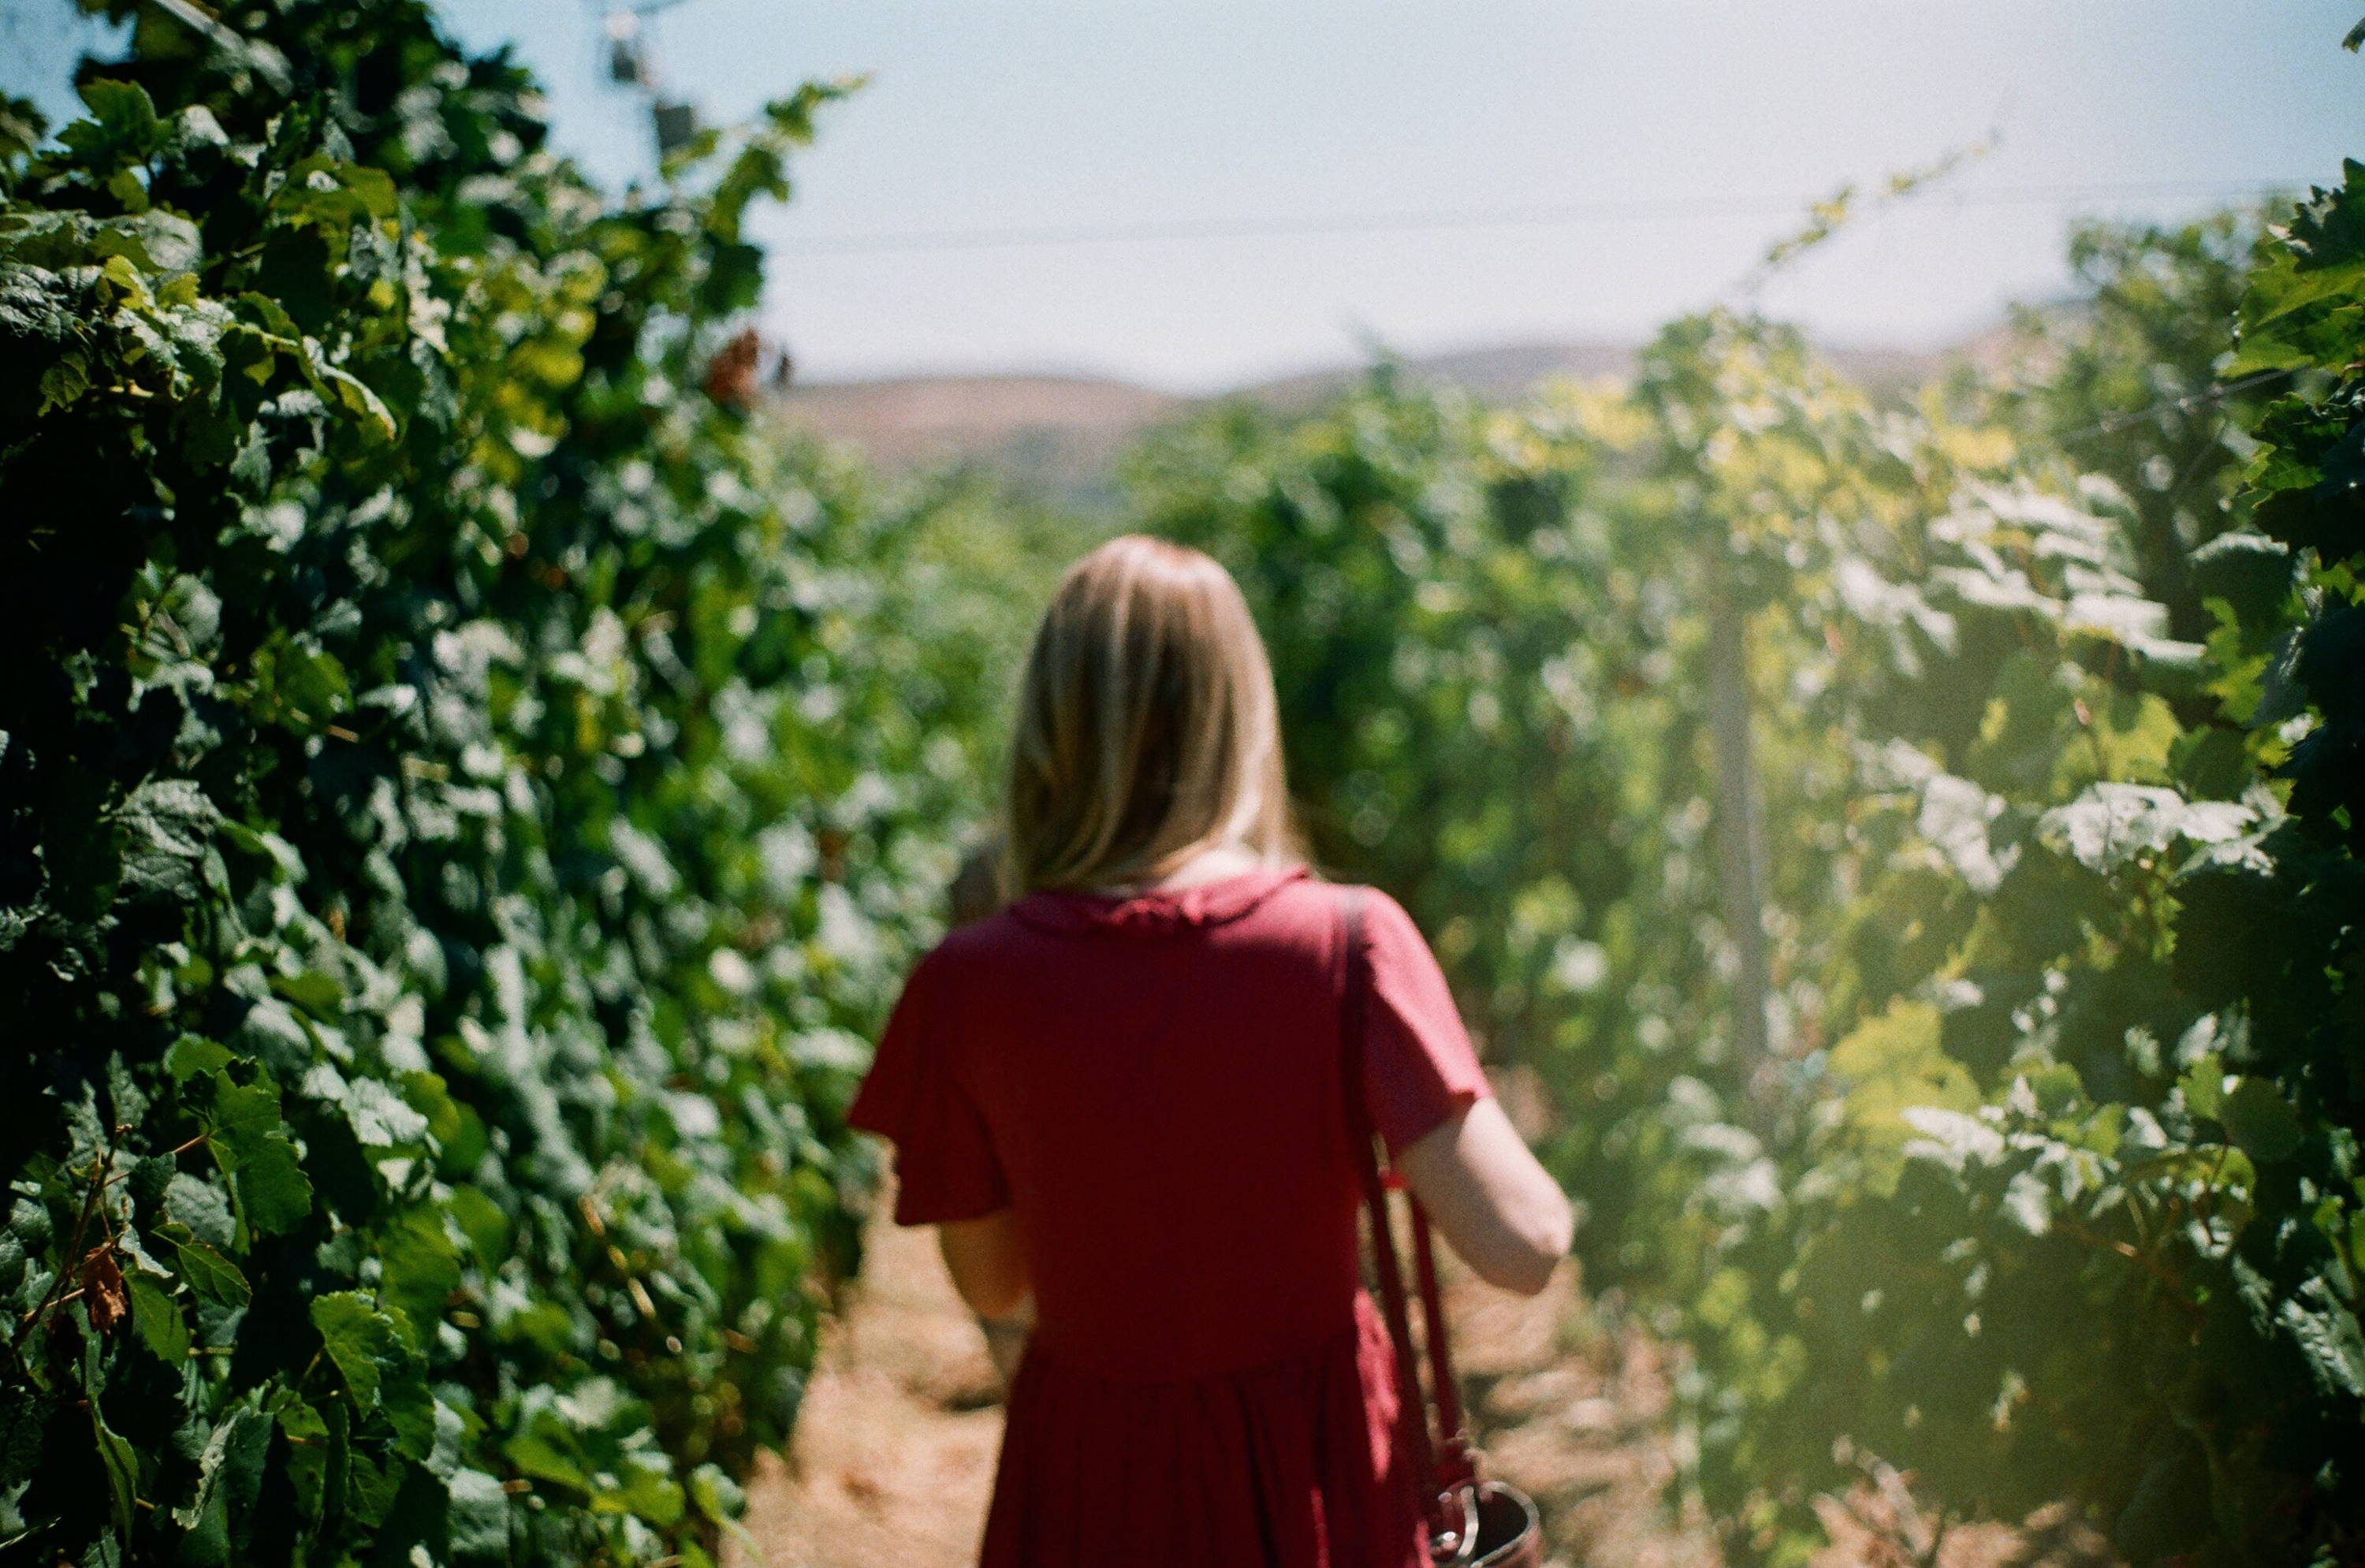 Woman walking through her local home vineyard choosing a local wine type.  